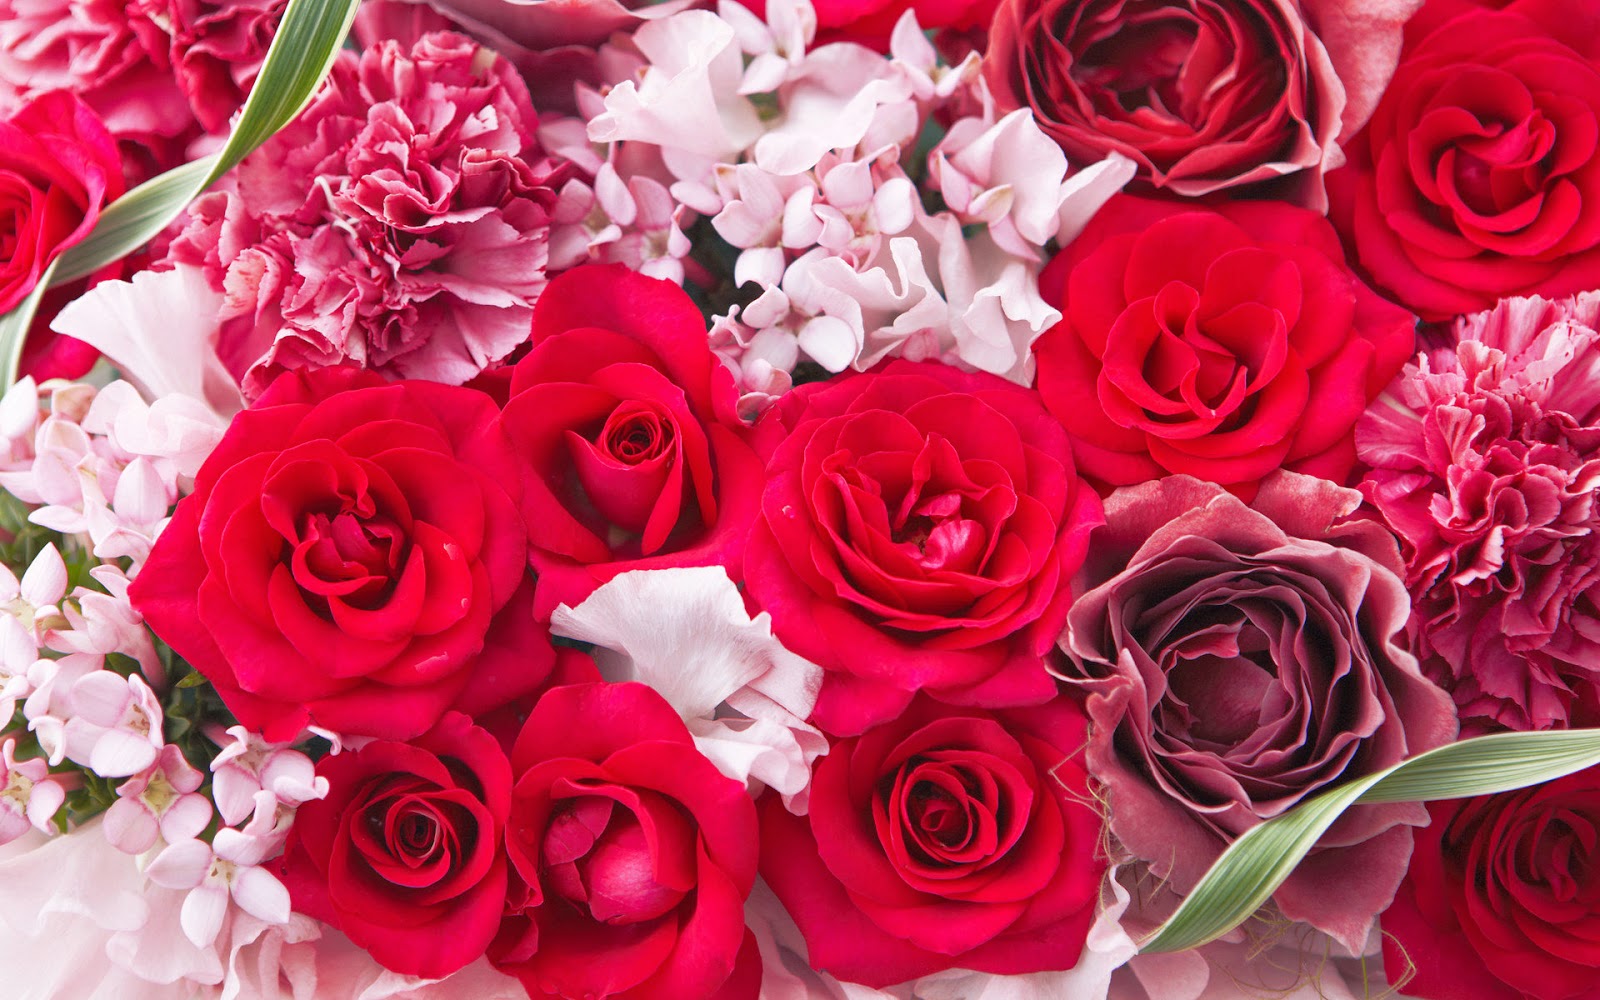 Gambar Bunga Romantis Cantik dan Indah  I Love You Wallpapers 